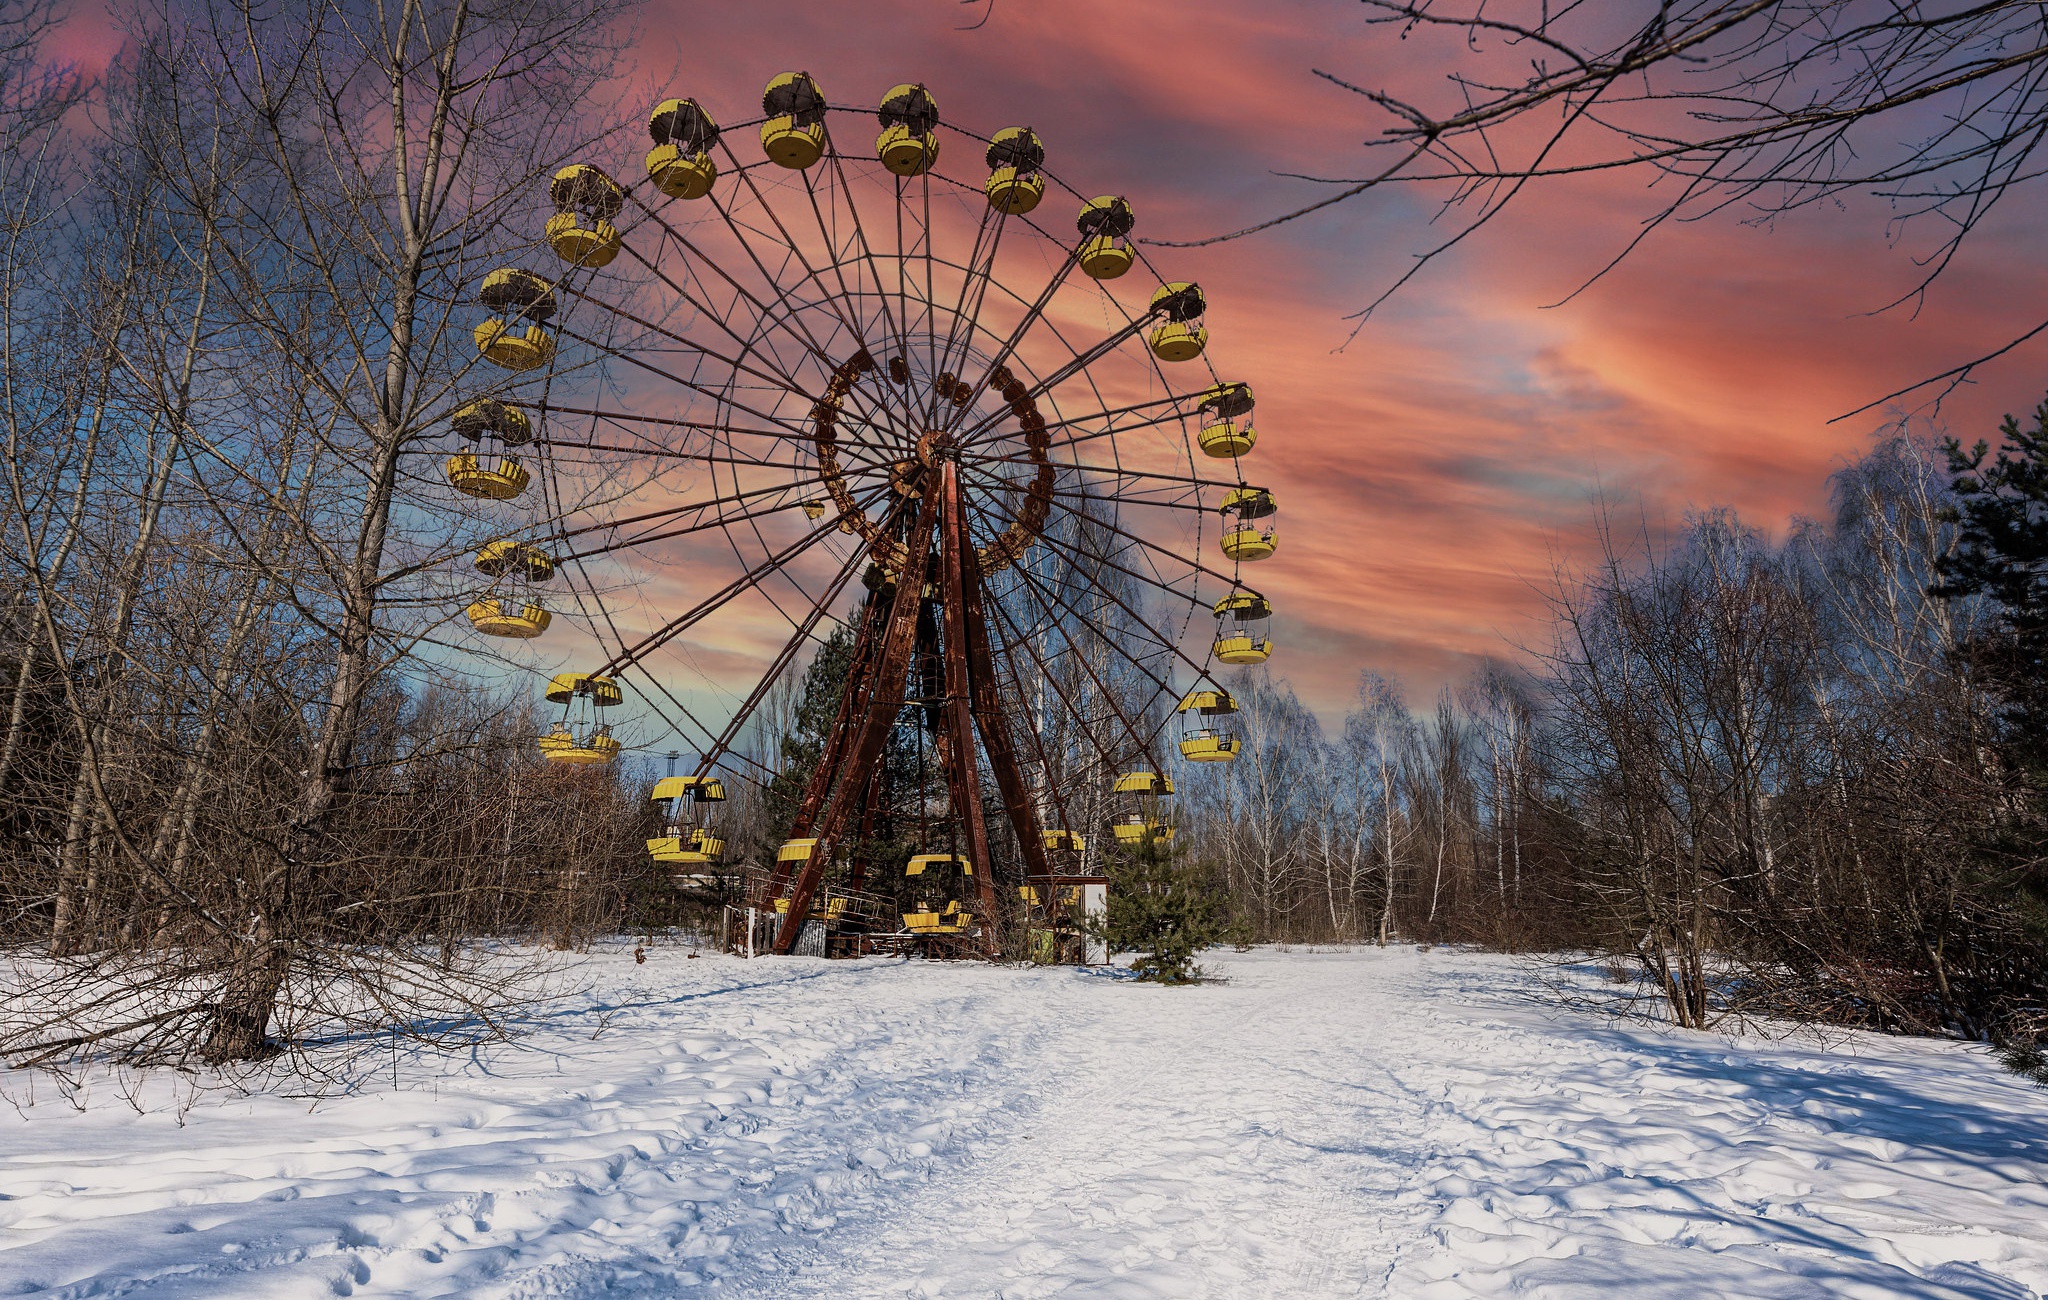 chernobyl, abandoned, man made, ferris wheel, snow, sunset, winter